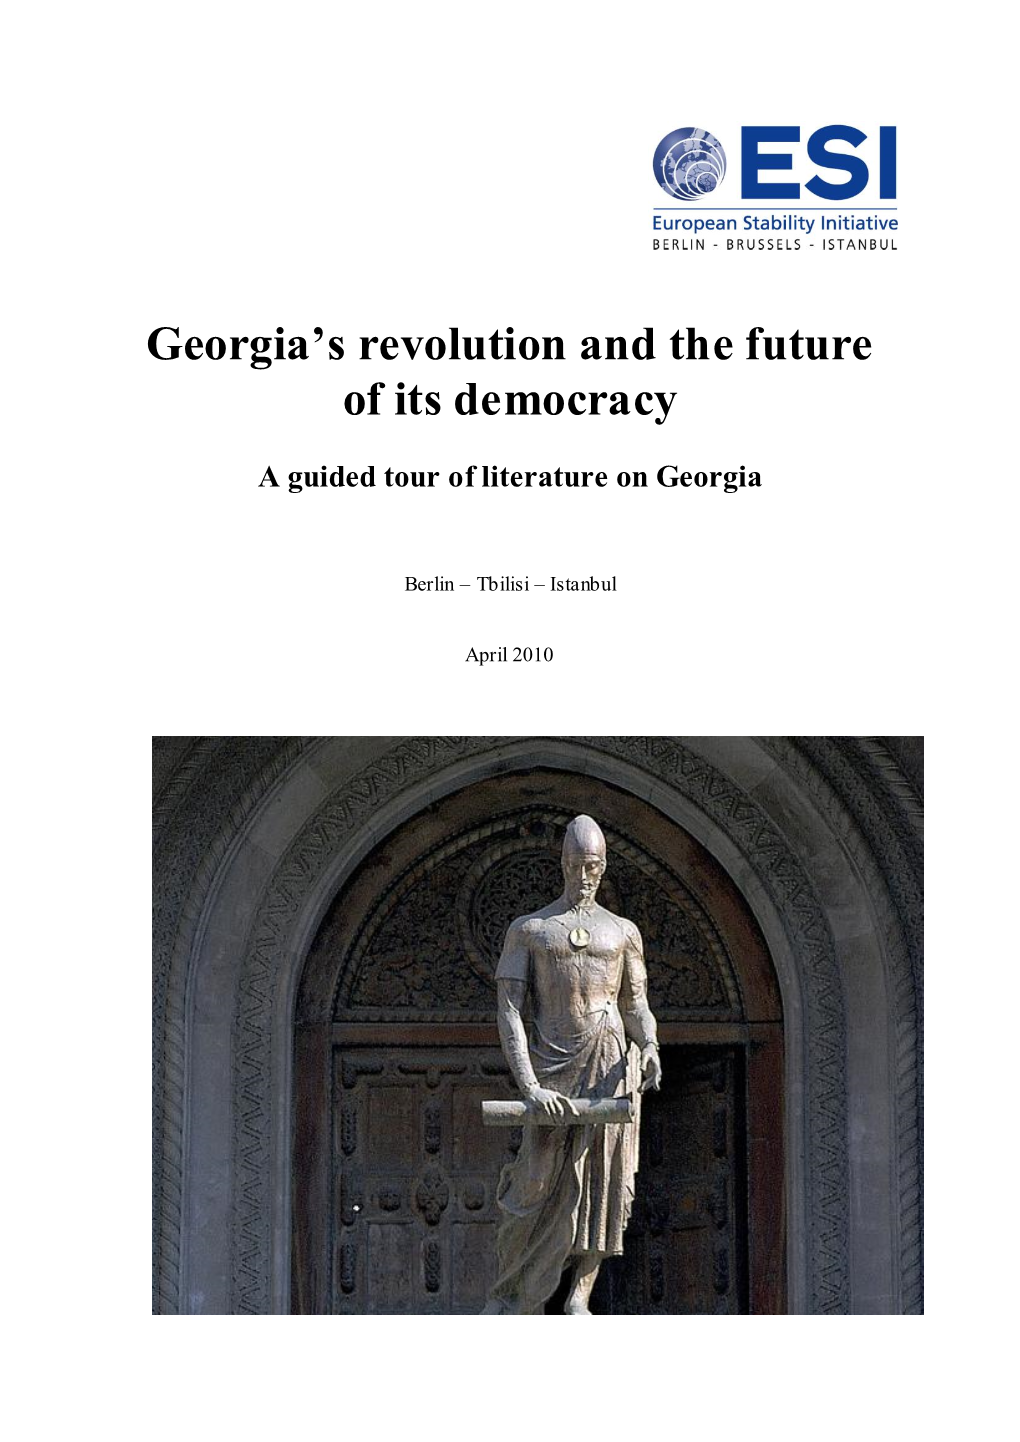 Georgia's Revolution and the Future of Its Democracy